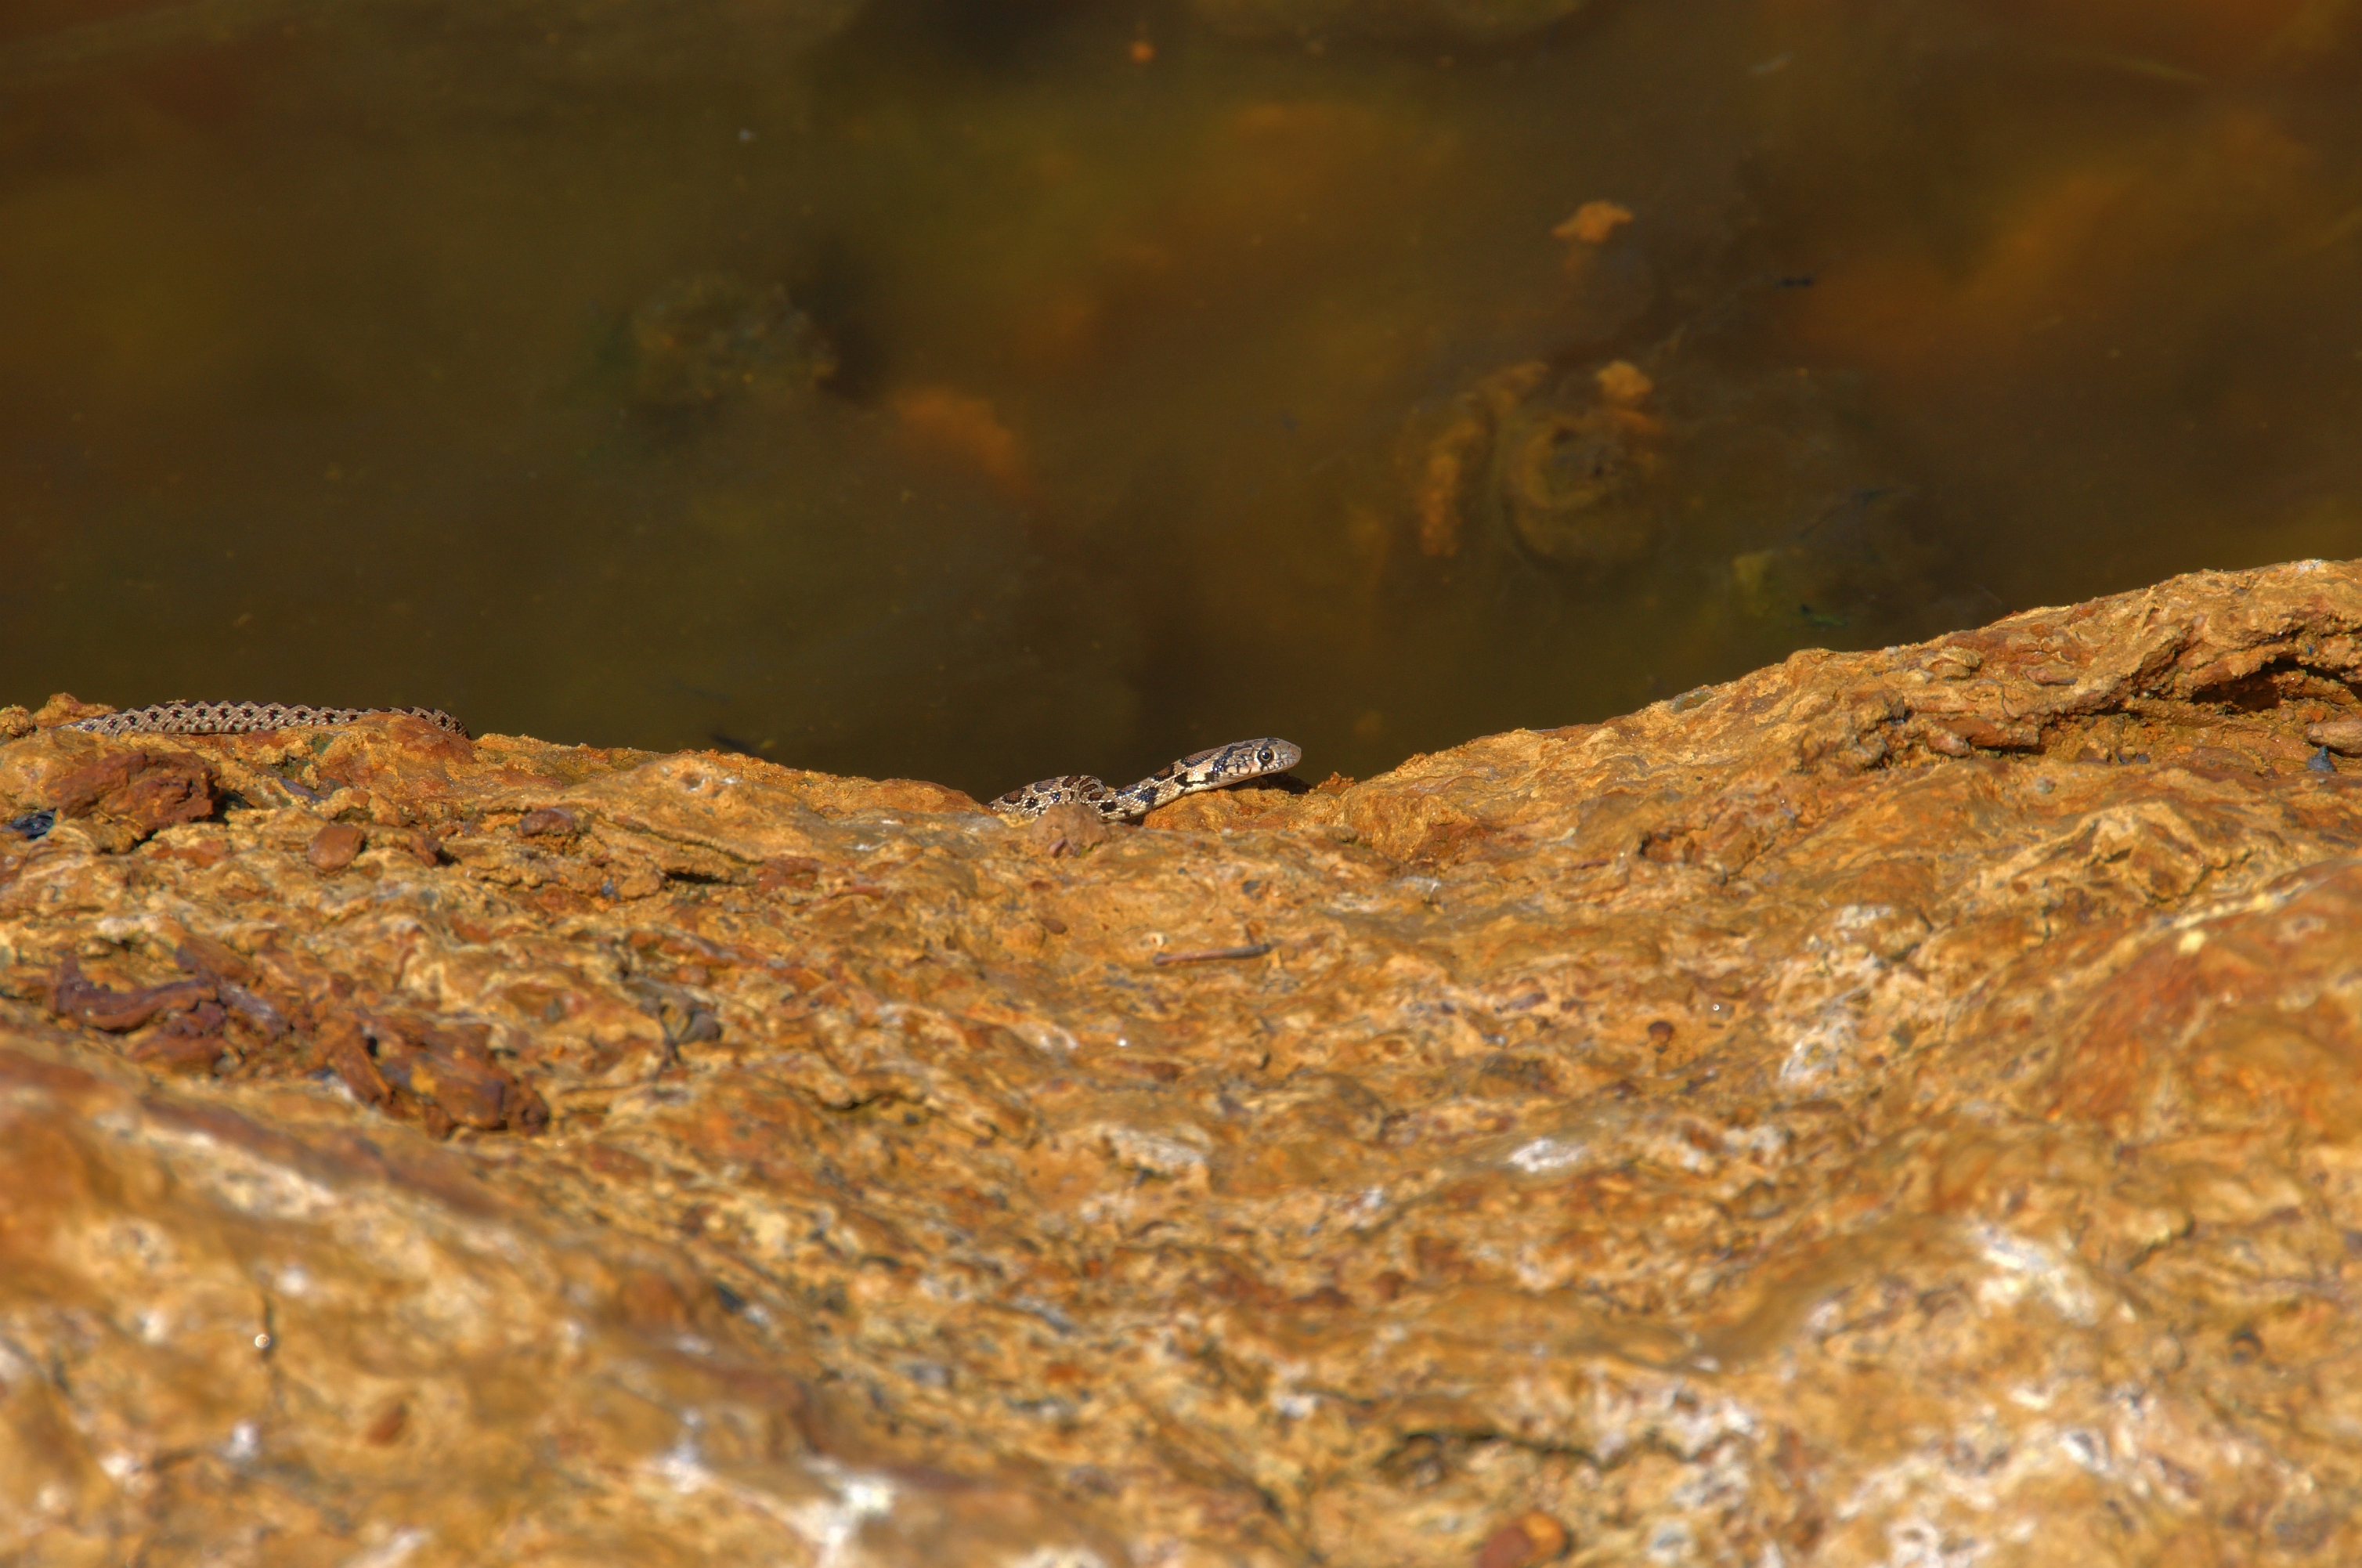 Snake at the bank of the Rio Tinto river photo